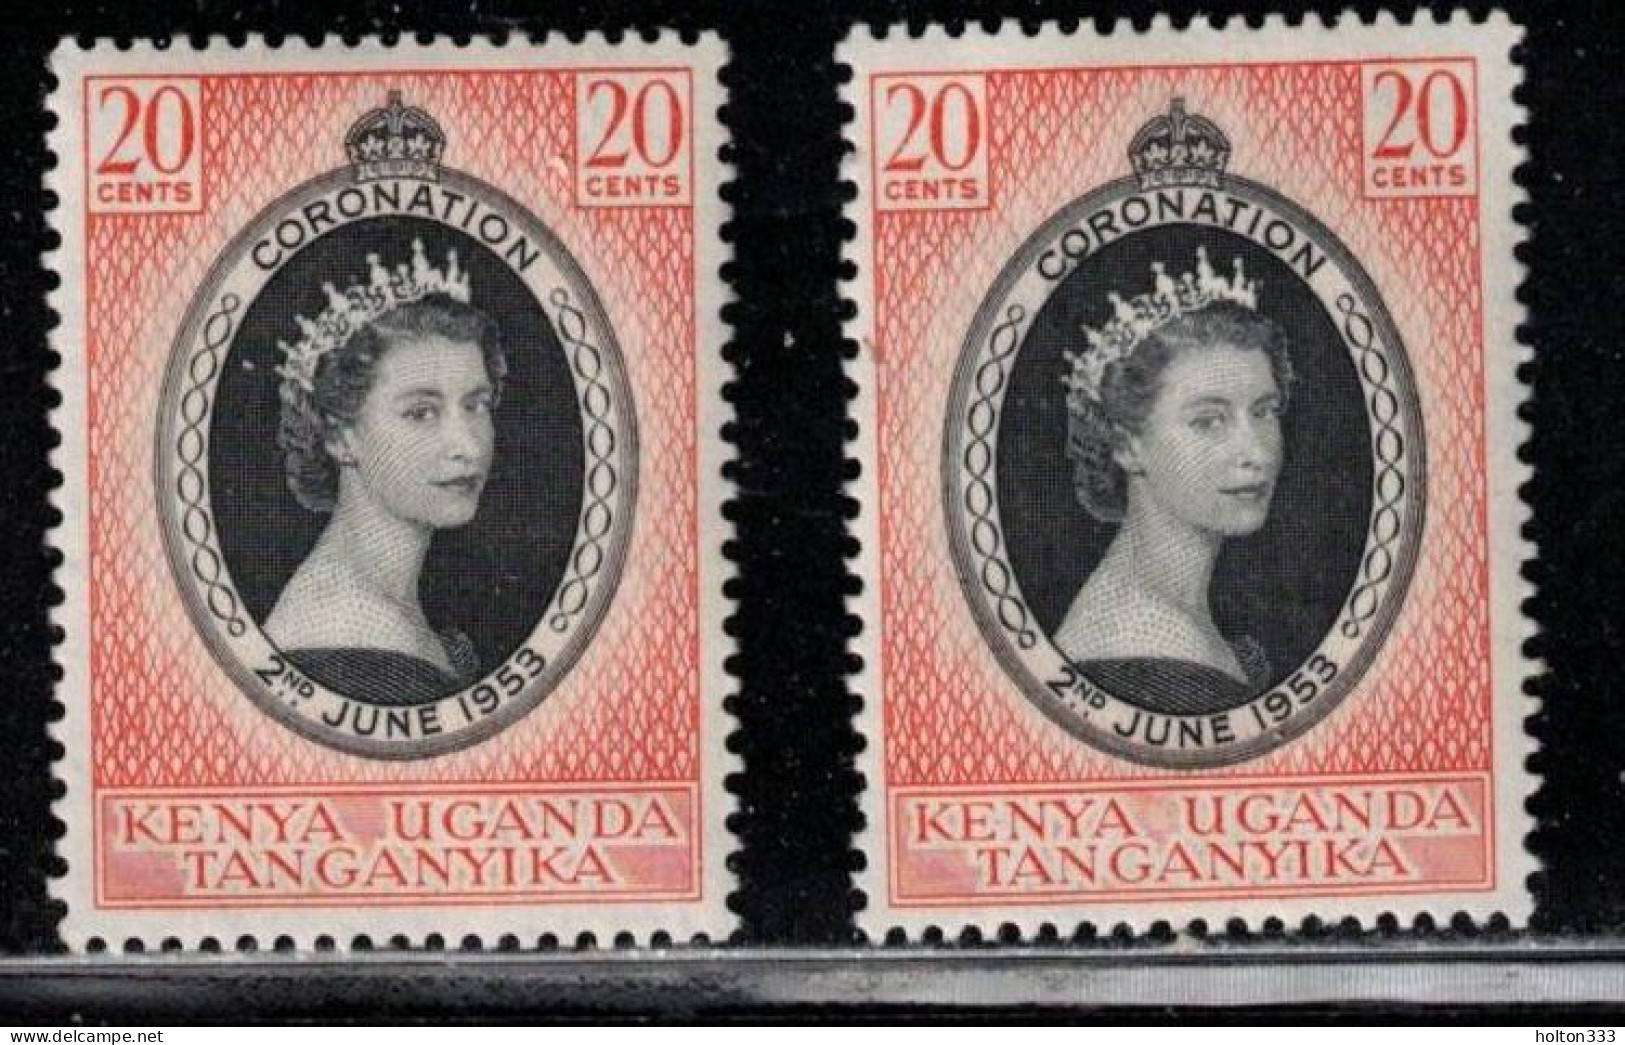 KENYA, UGANDA & TANGANYIKA Scott # 101 MH X 2 - QEII Coronation - Kenya, Oeganda & Tanganyika